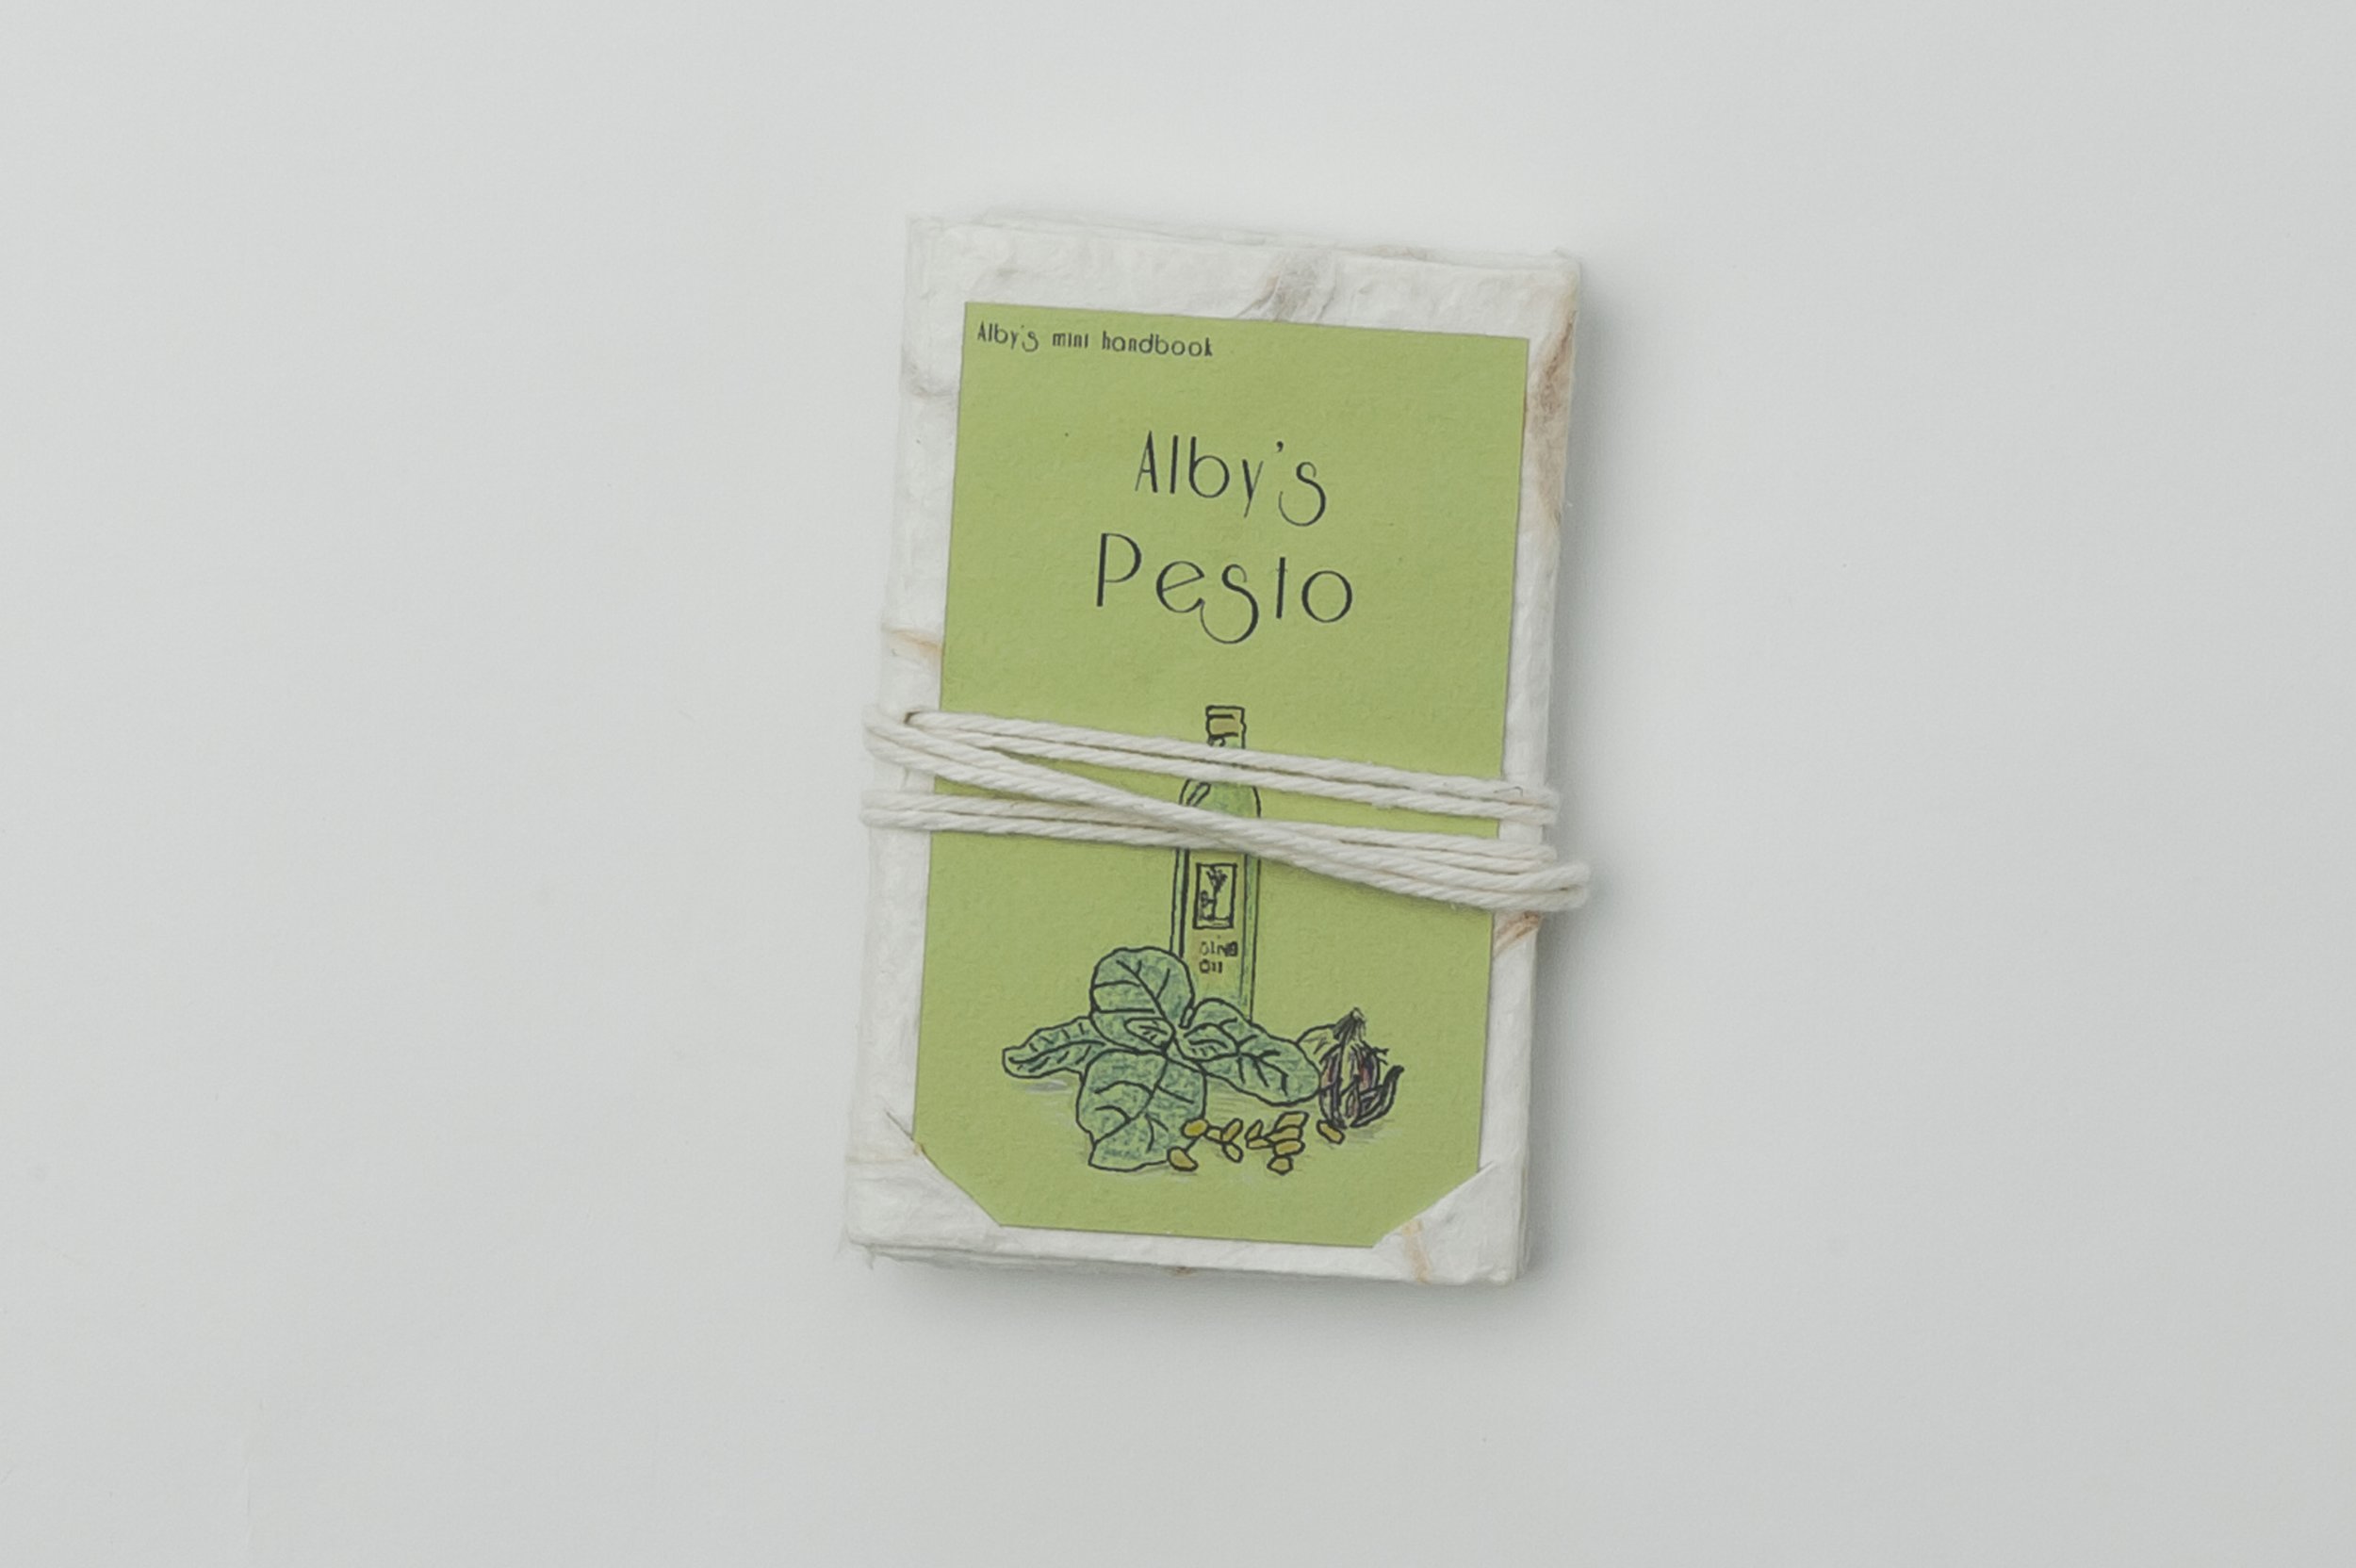 Alby's-pesto-book-01.jpg